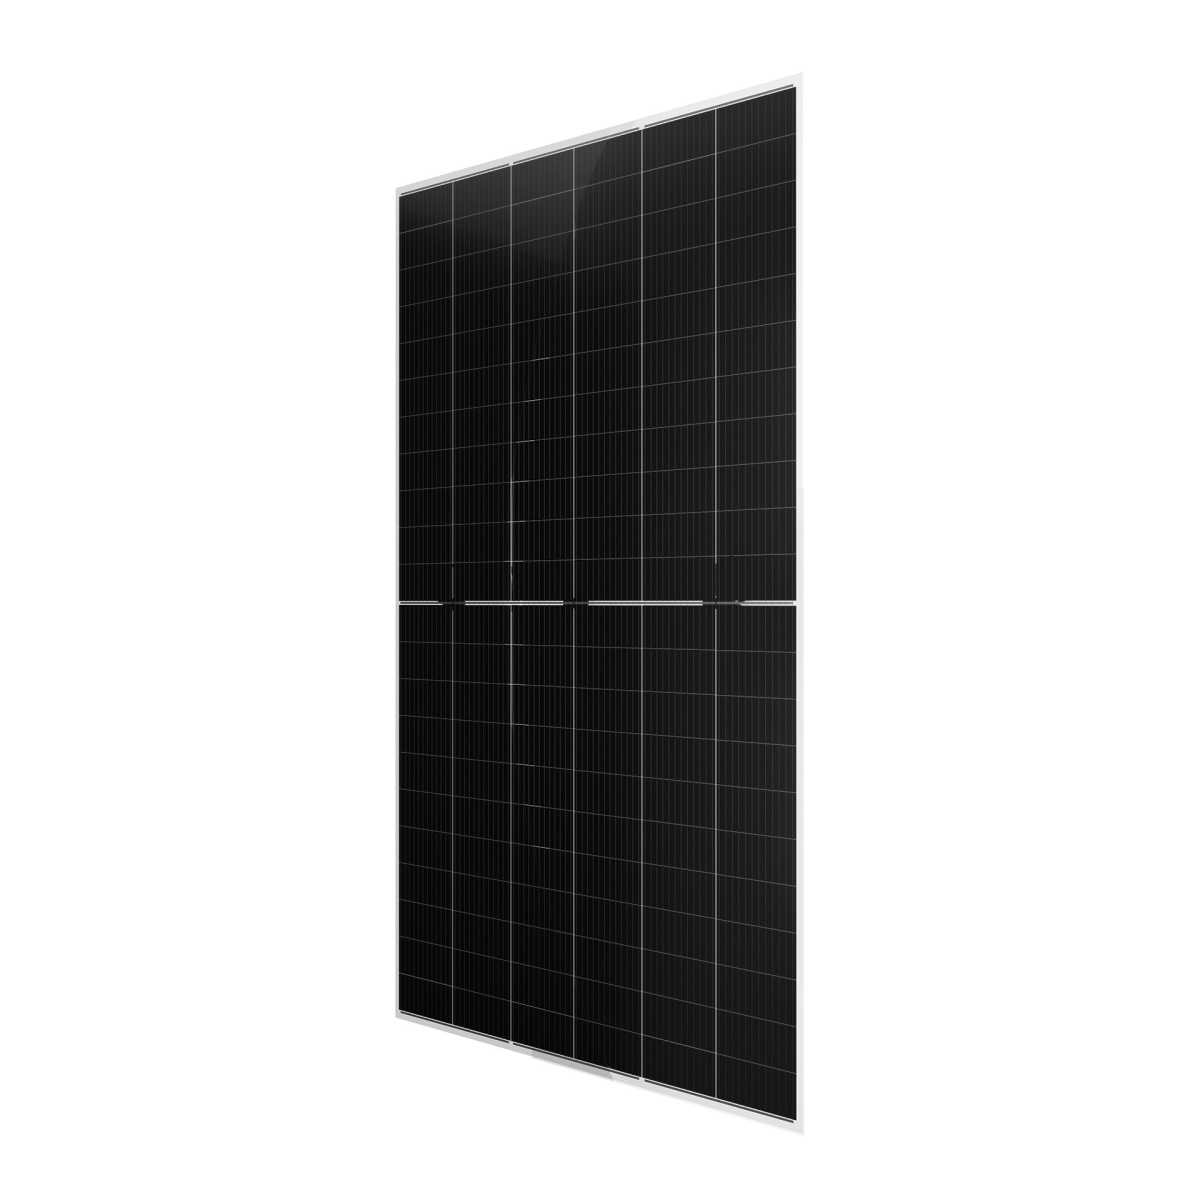 Tommatech 660Wp M12 132PM Cells Bifacial G2G Half-Cut MB Solar Panel